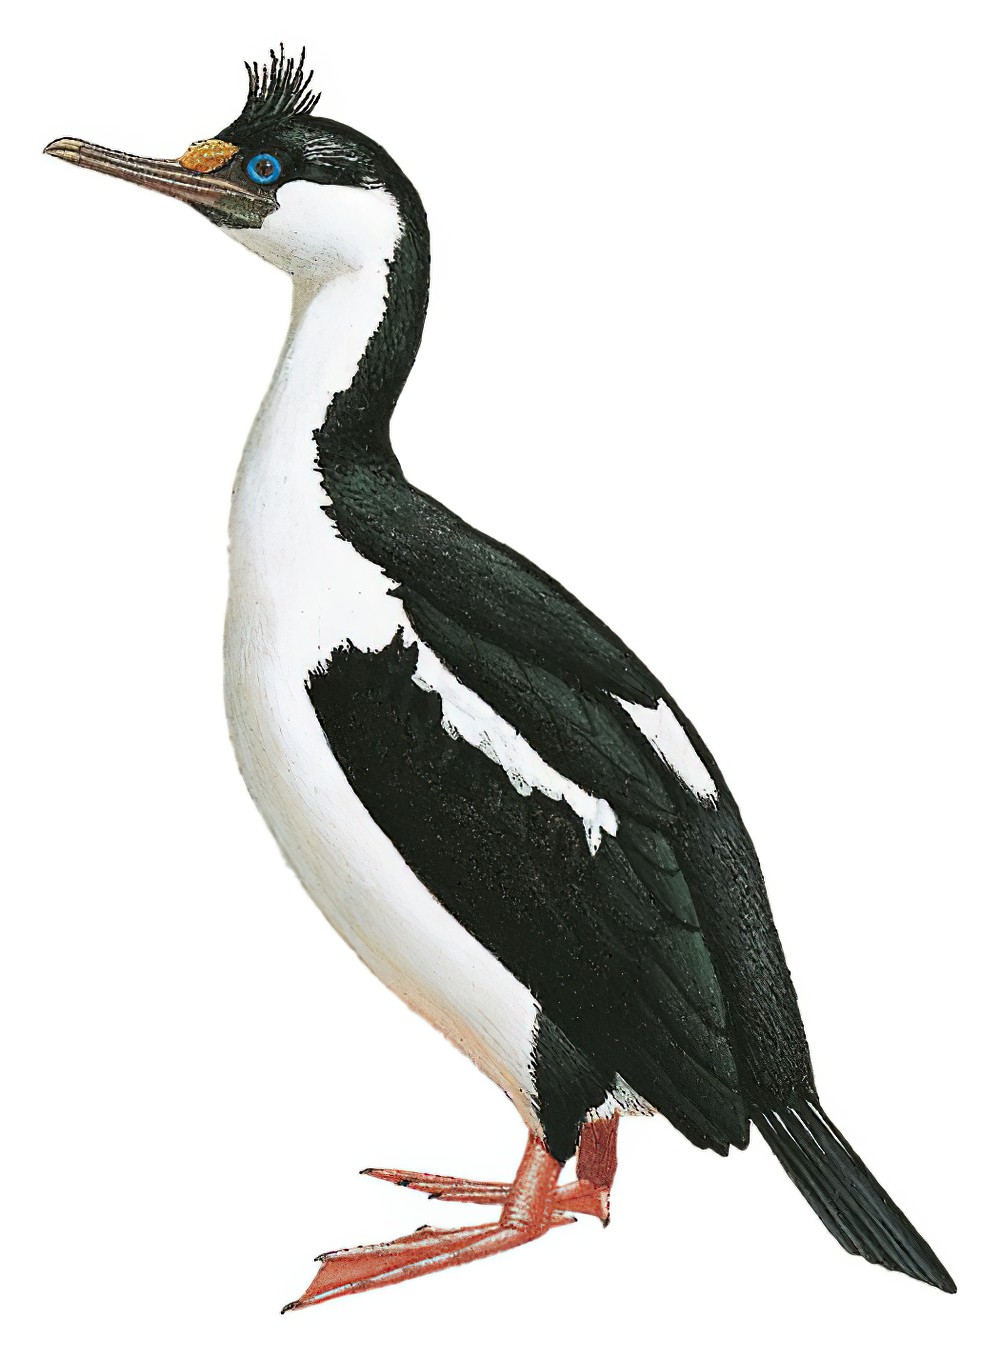 Imperial Cormorant / Phalacrocorax atriceps